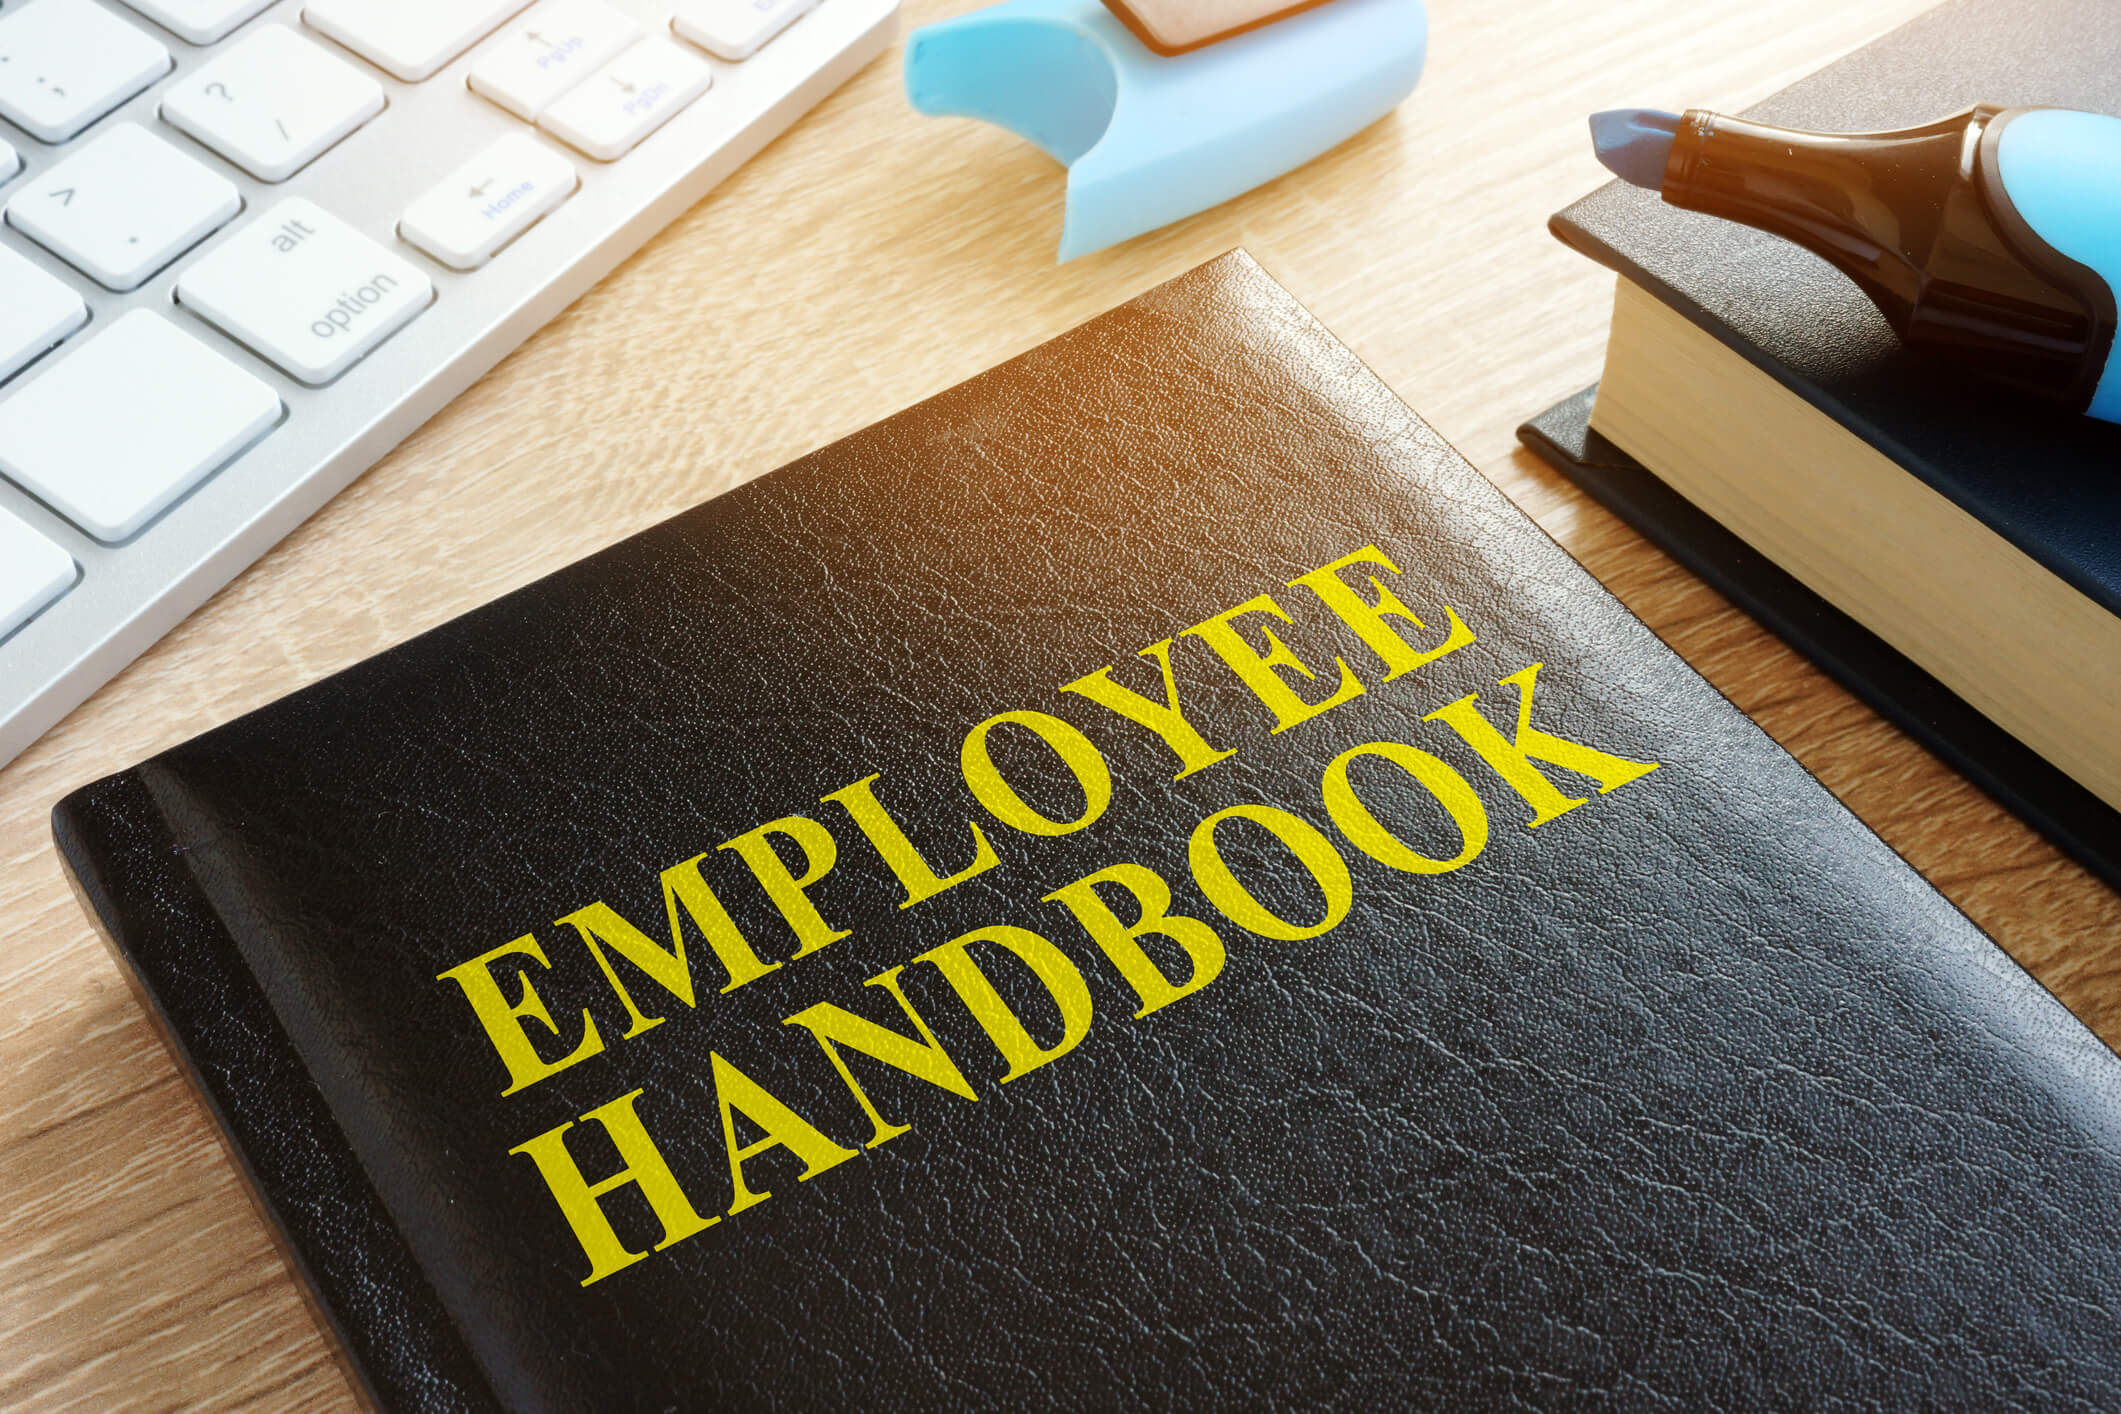 Black employee handbook and blue highlighter